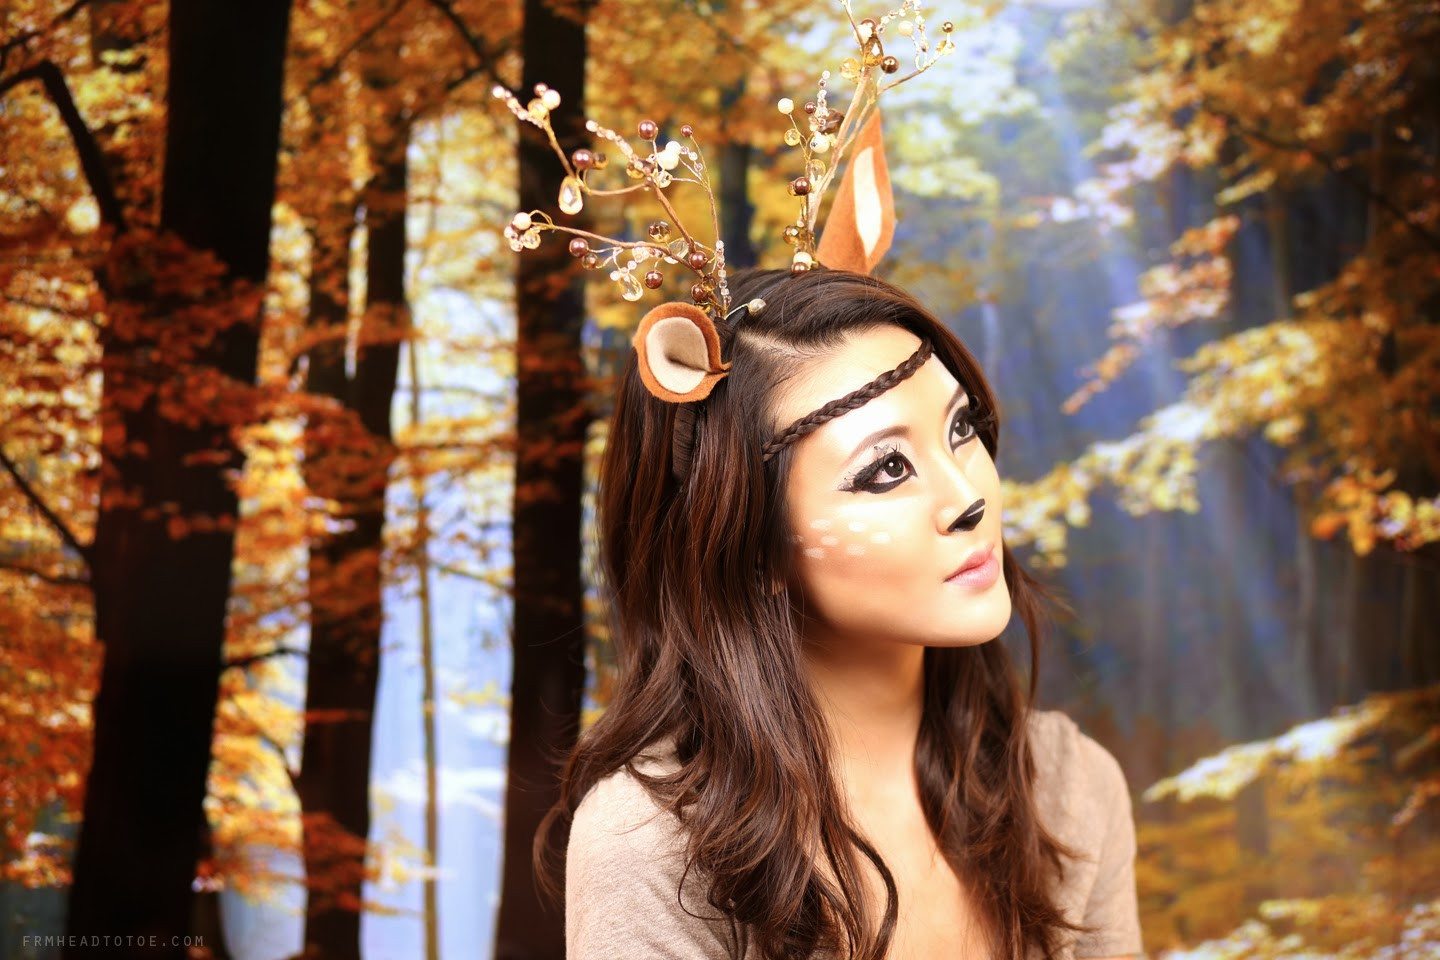 Best ideas about Deer Halloween Costume DIY
. Save or Pin Deer Makeup Tutorial Now.